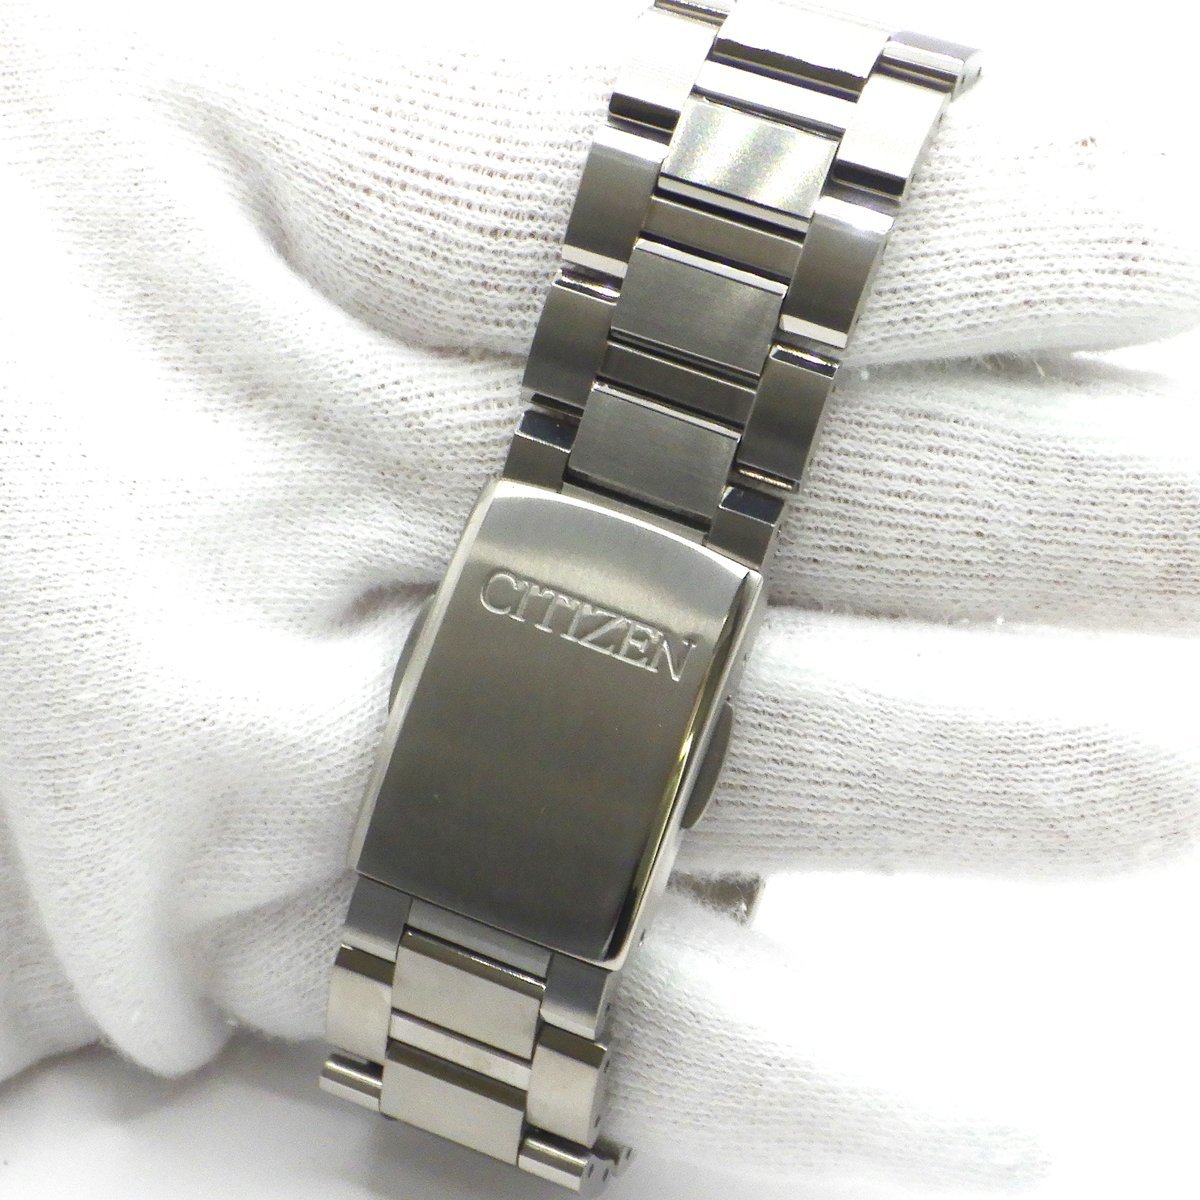  Citizen Atessa akto line CB0287-68L Eko-Drive radio wave solar titanium wristwatch box unused *